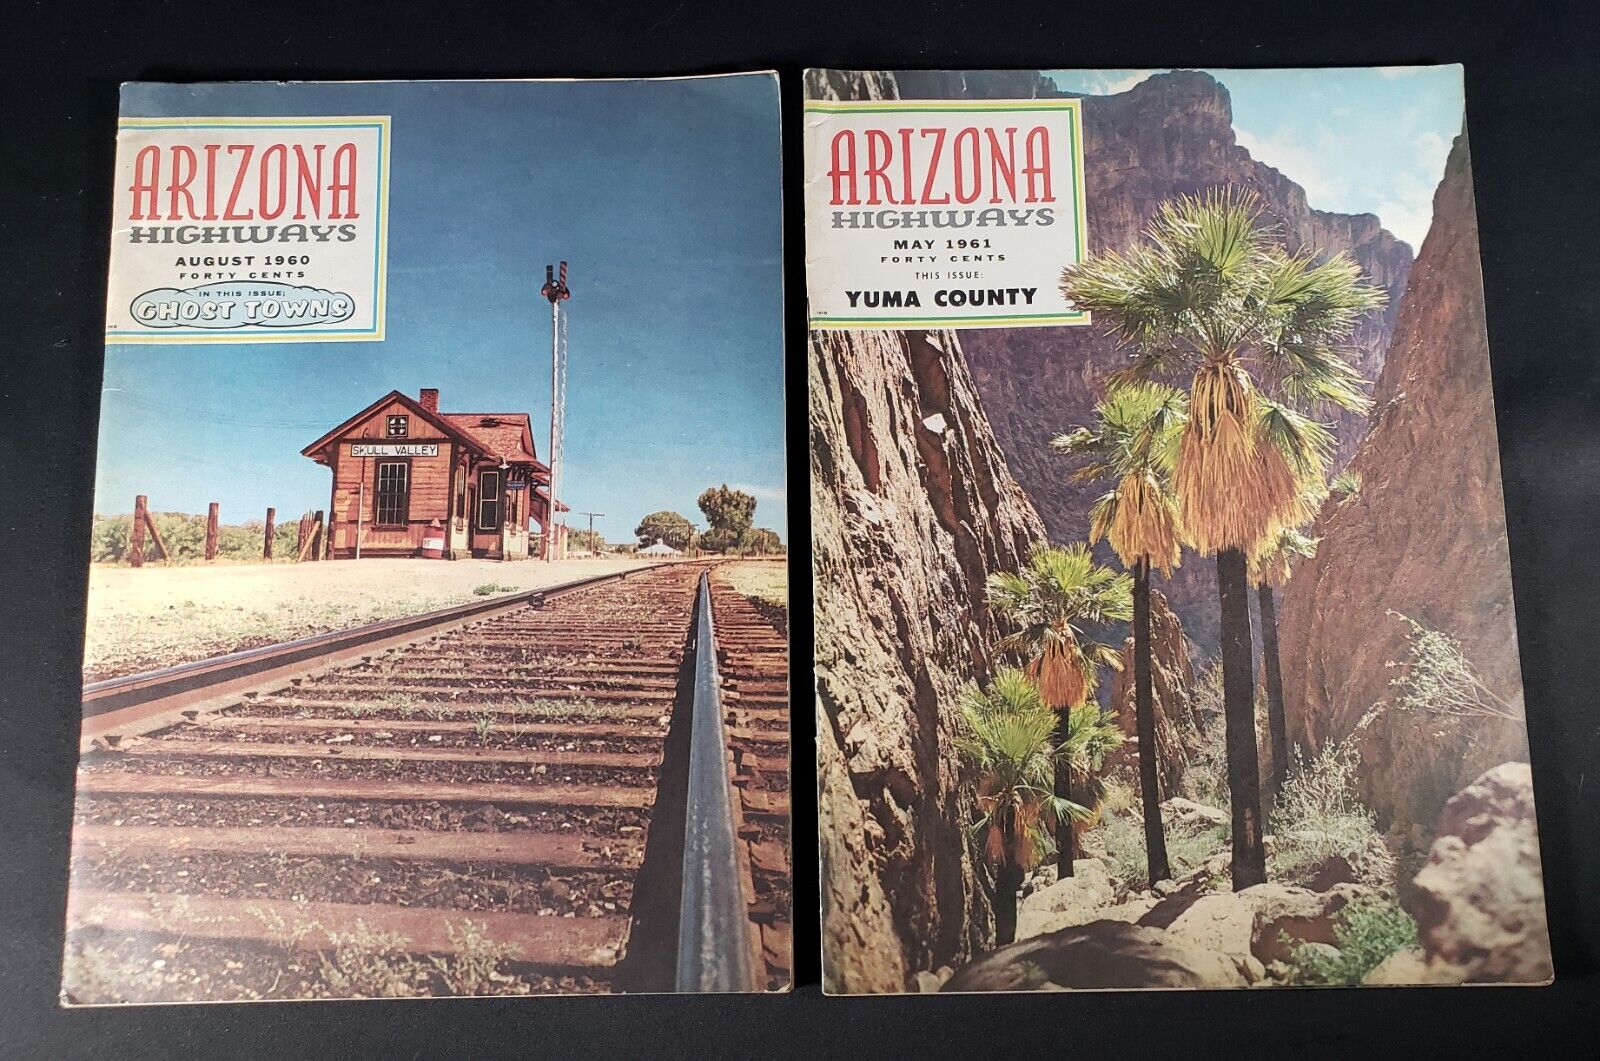 Arizona Highways 1960 & 1961 Yuma County Ghost Towns Advertising Ephemera